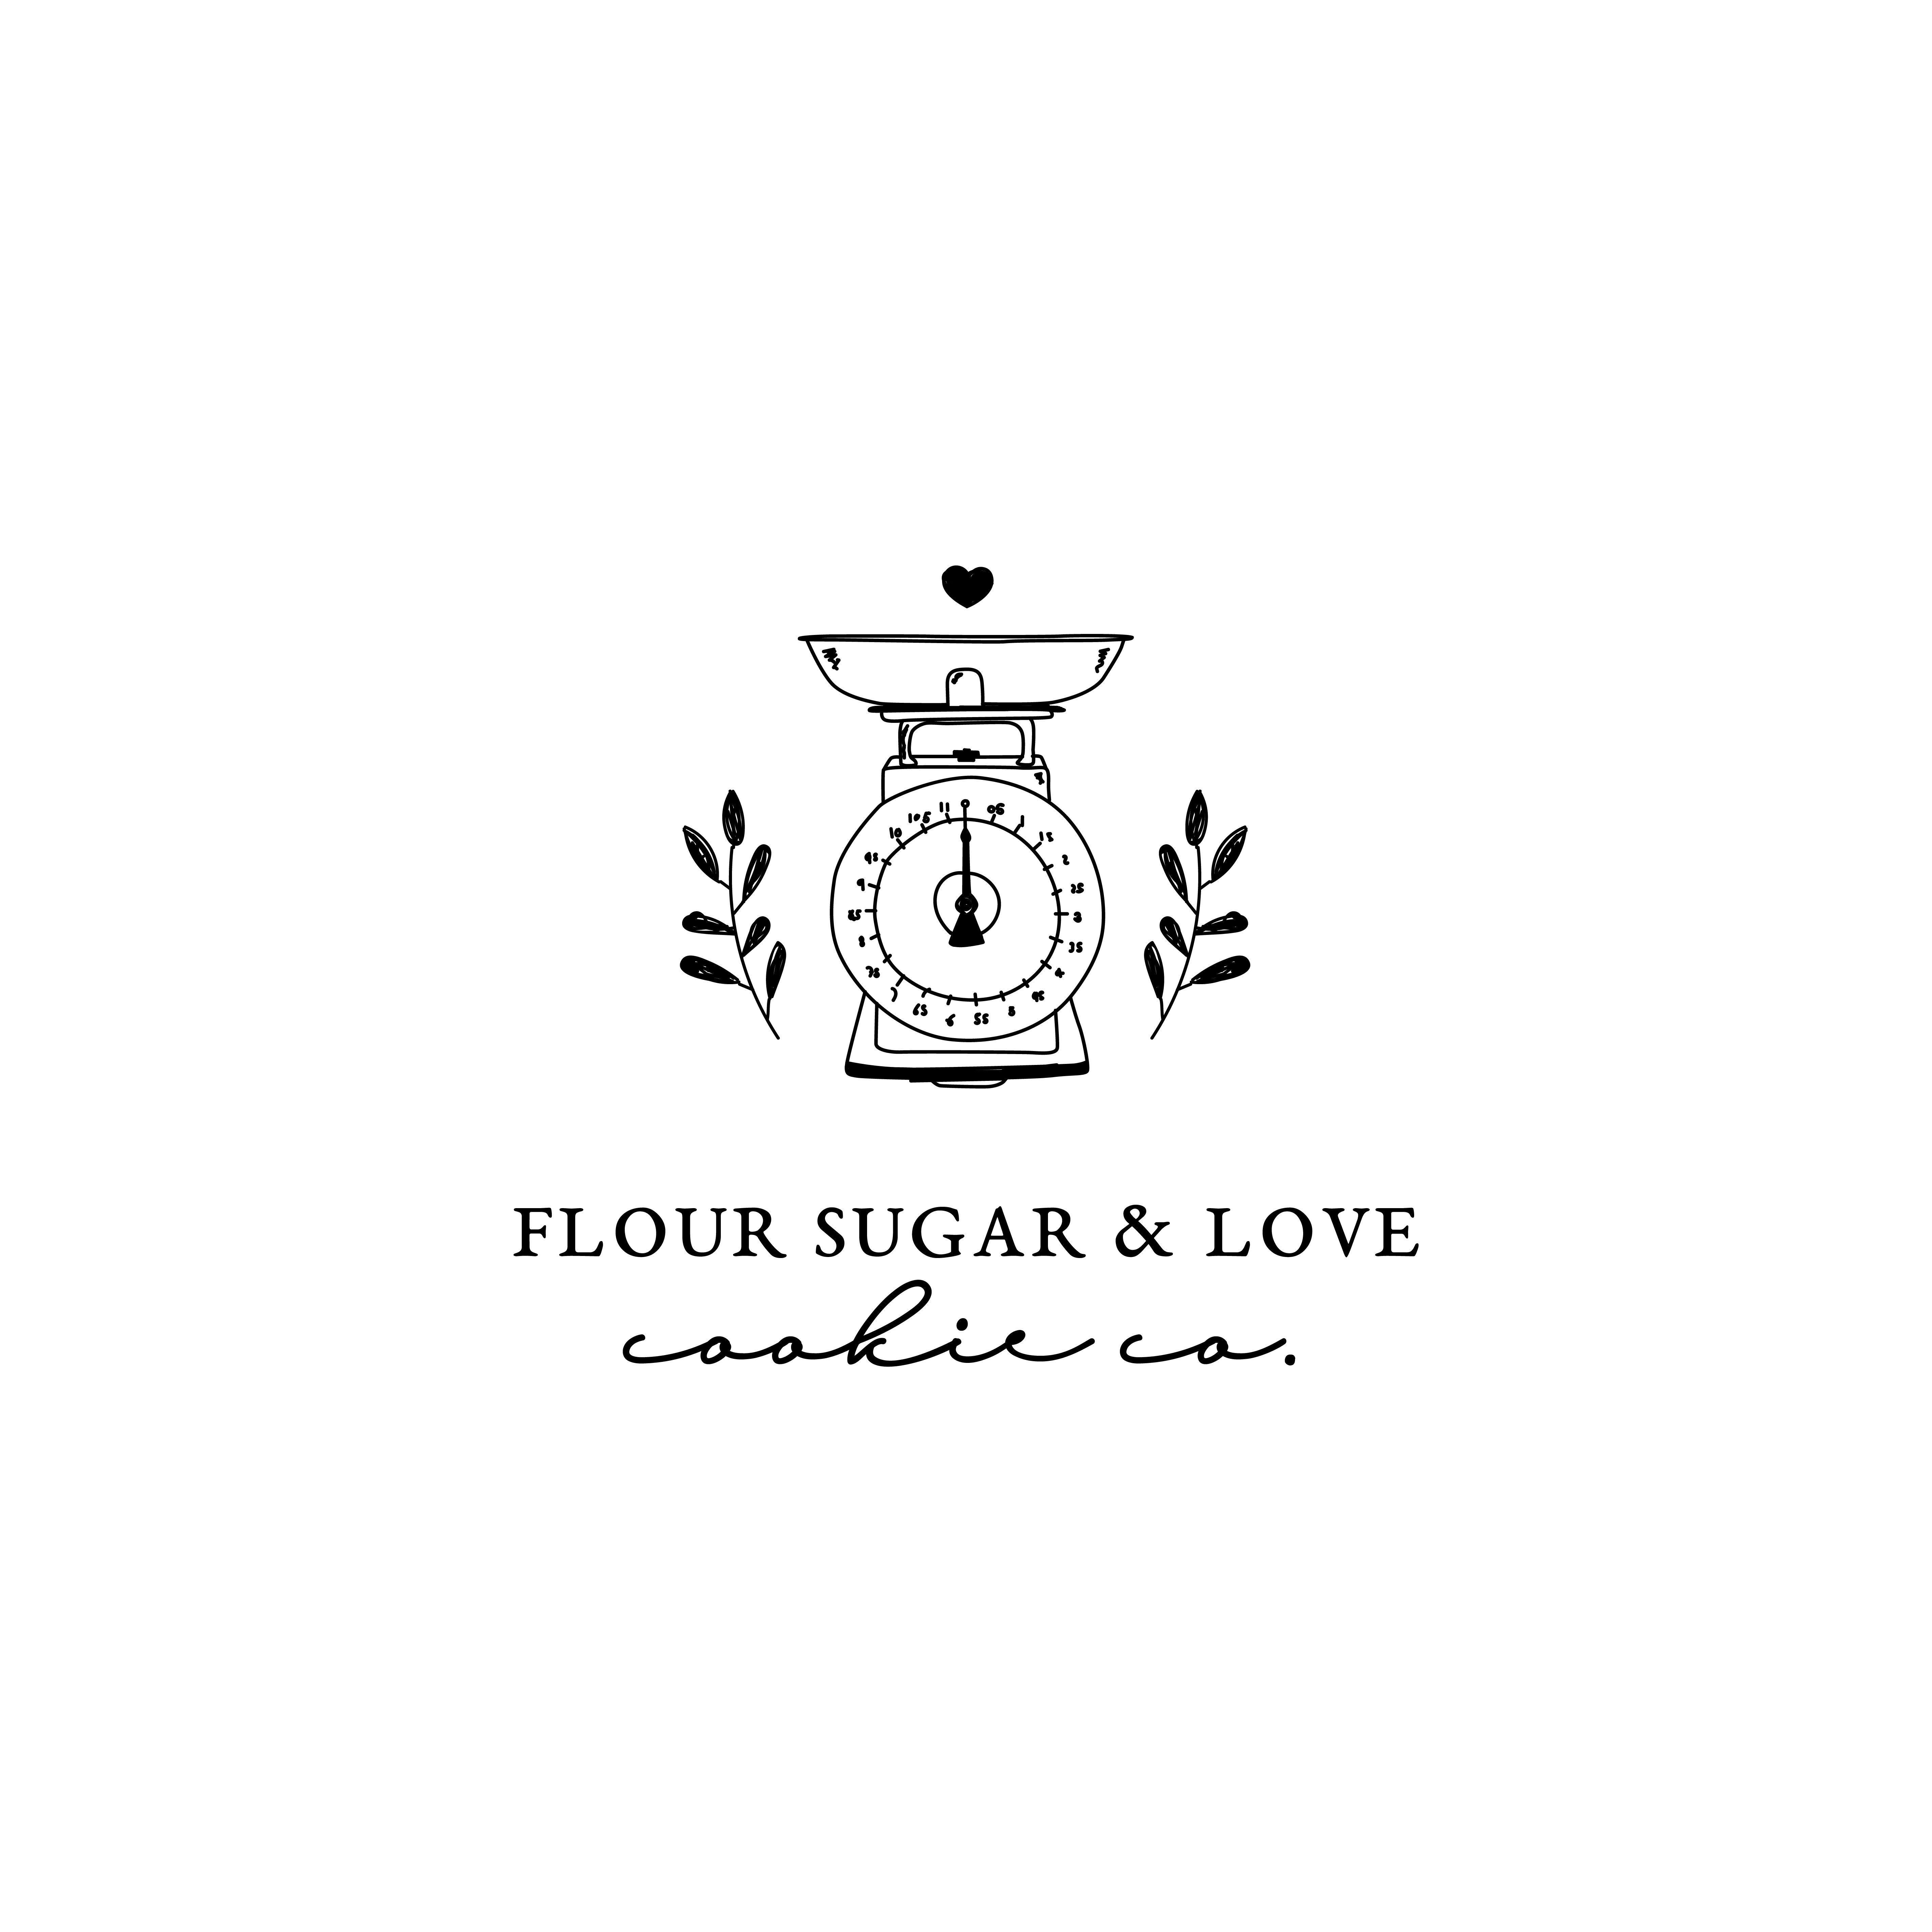 Old Black Scale Logo - Flour Sugar & Love Bread Baking Homemade Scale Old Antique Design ...